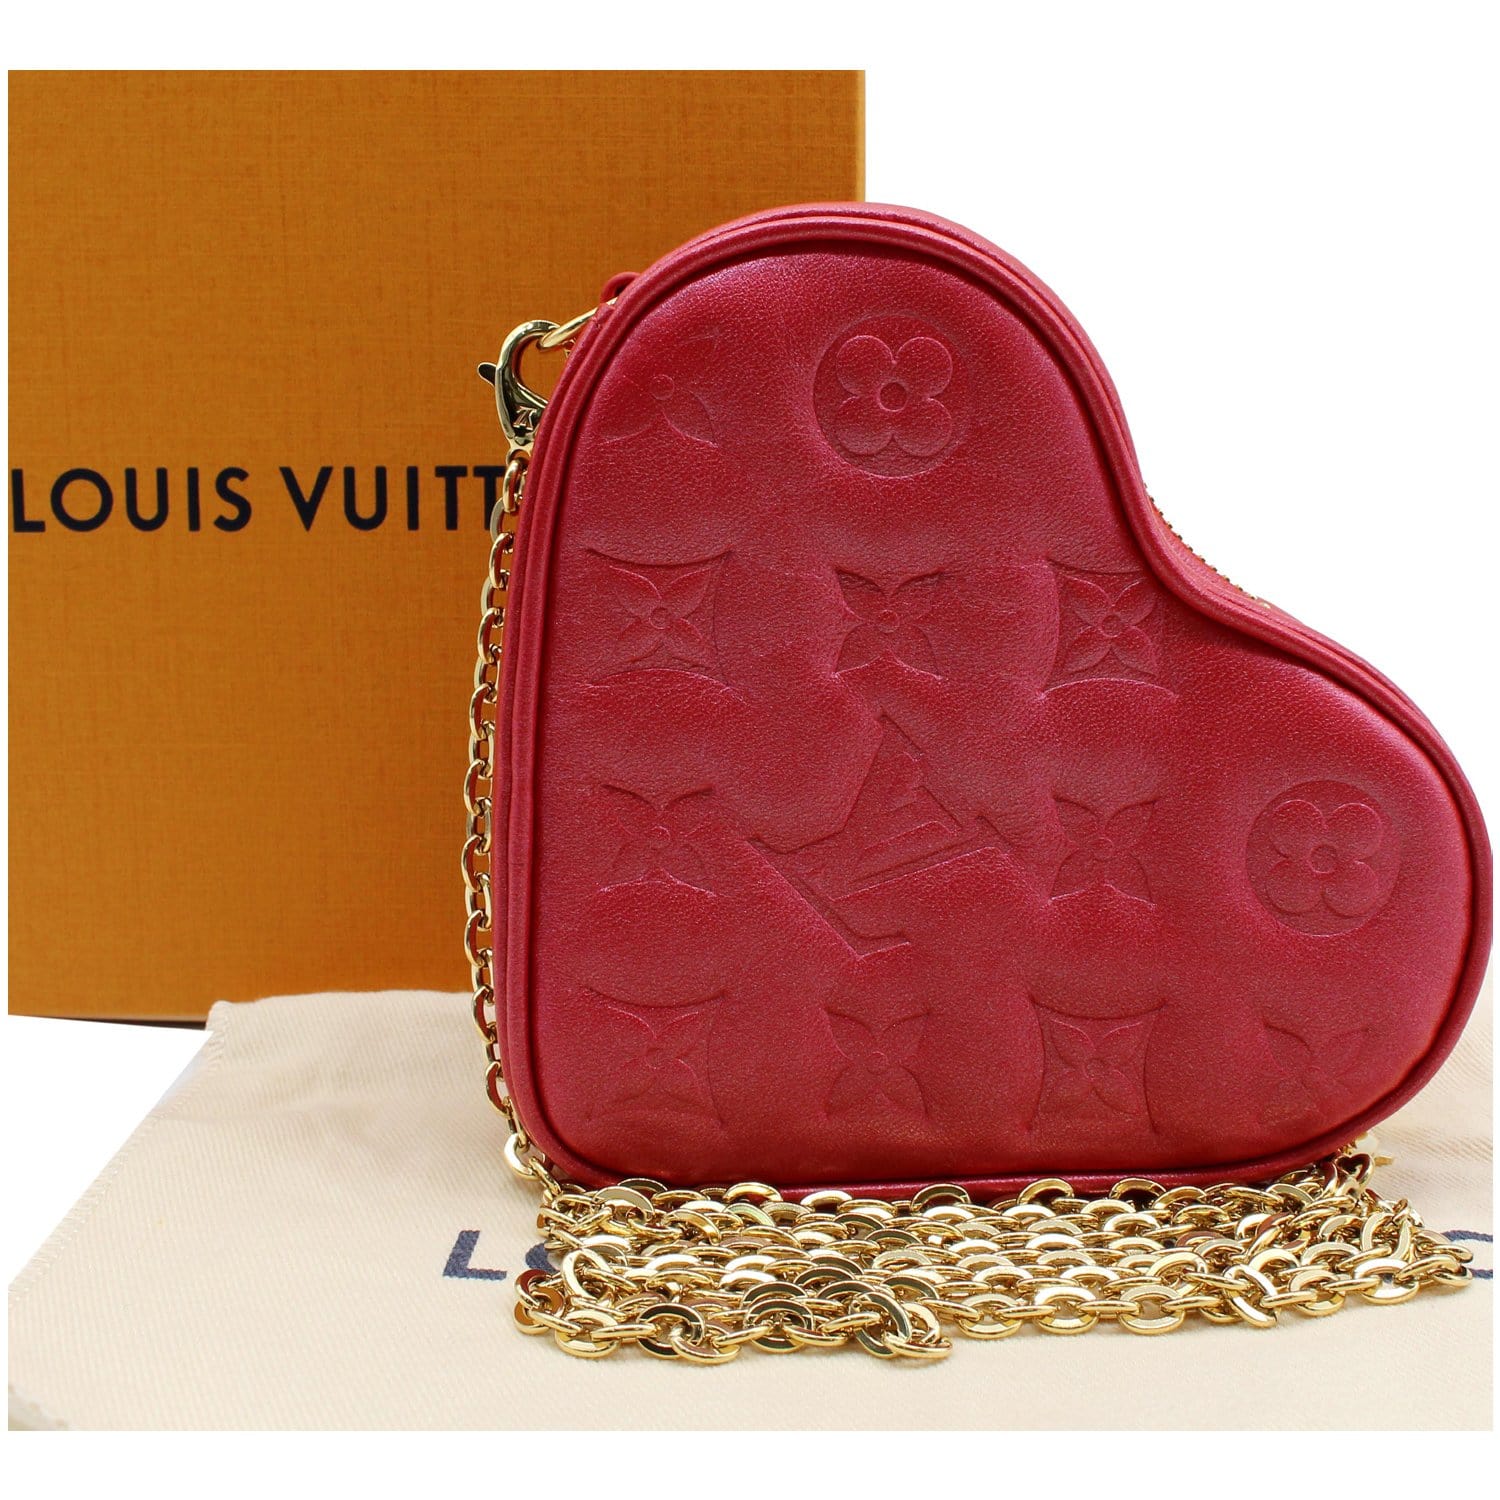 Louis Vuitton Limited Edition Monogram Degrade Heart Coin Purse